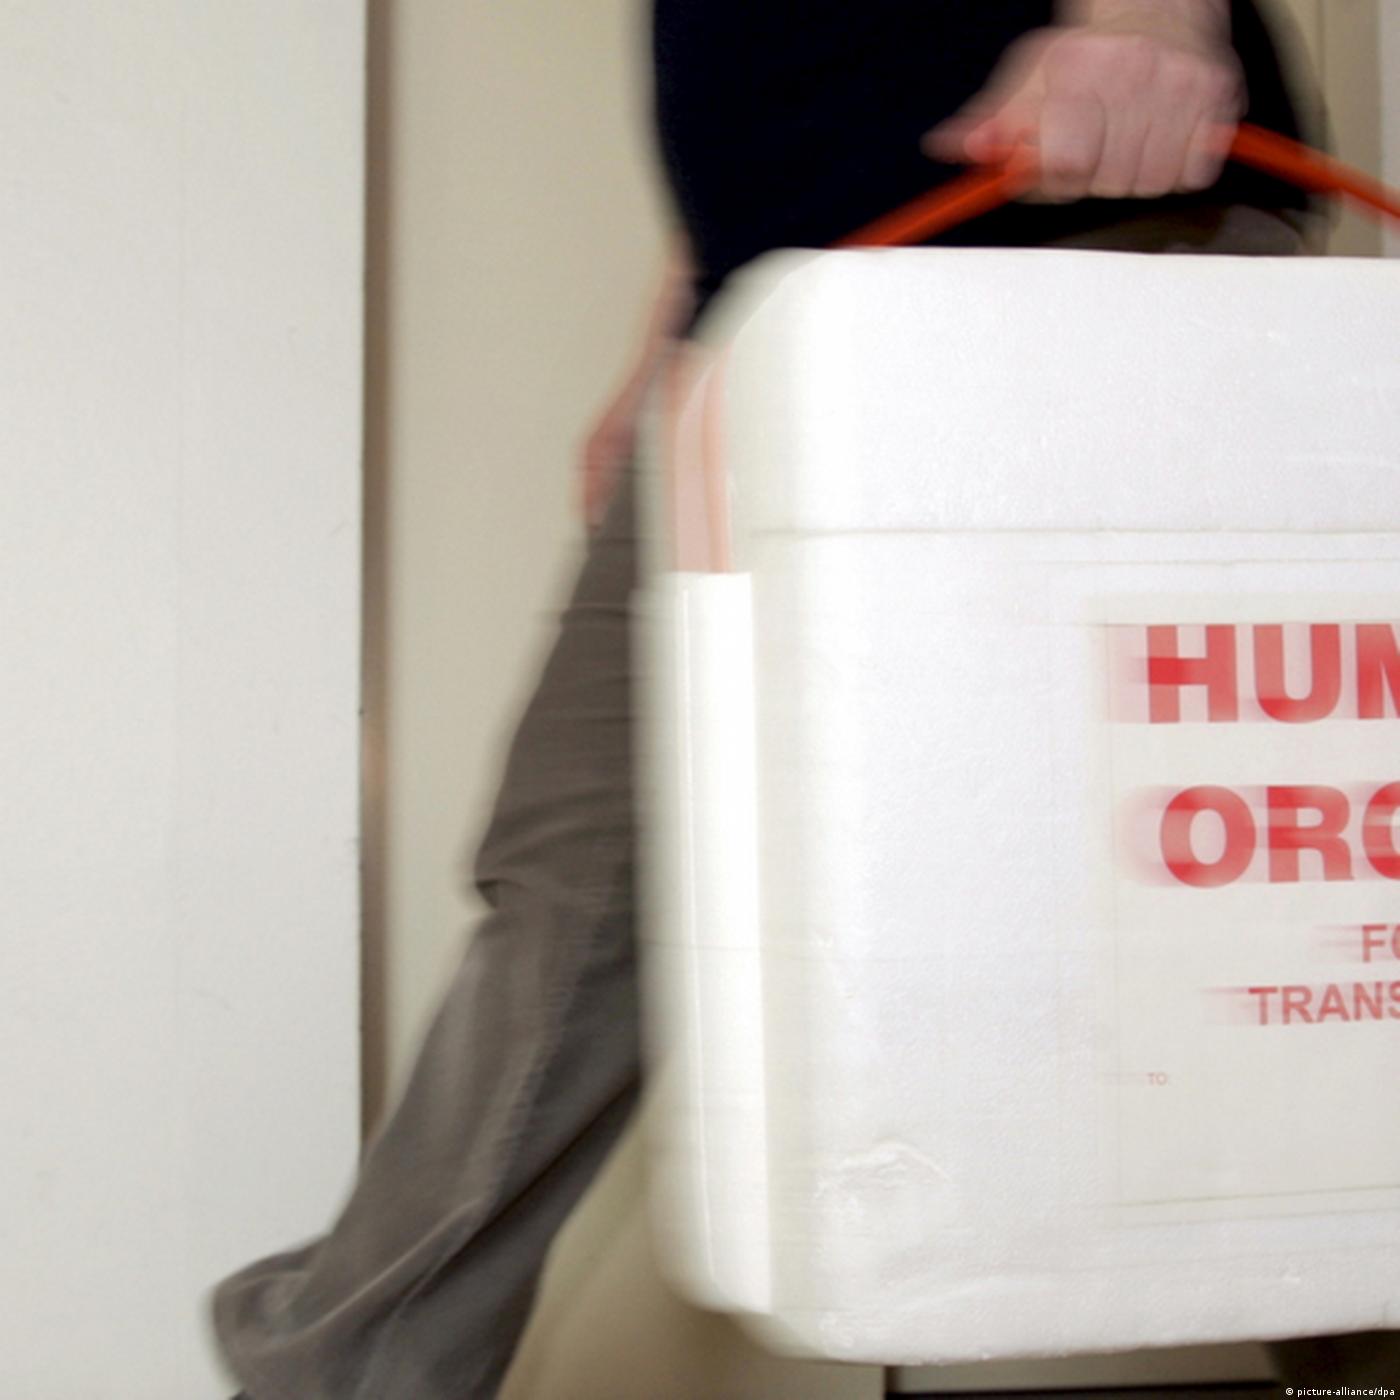 Britain: ”Good Samaritan” organ donation